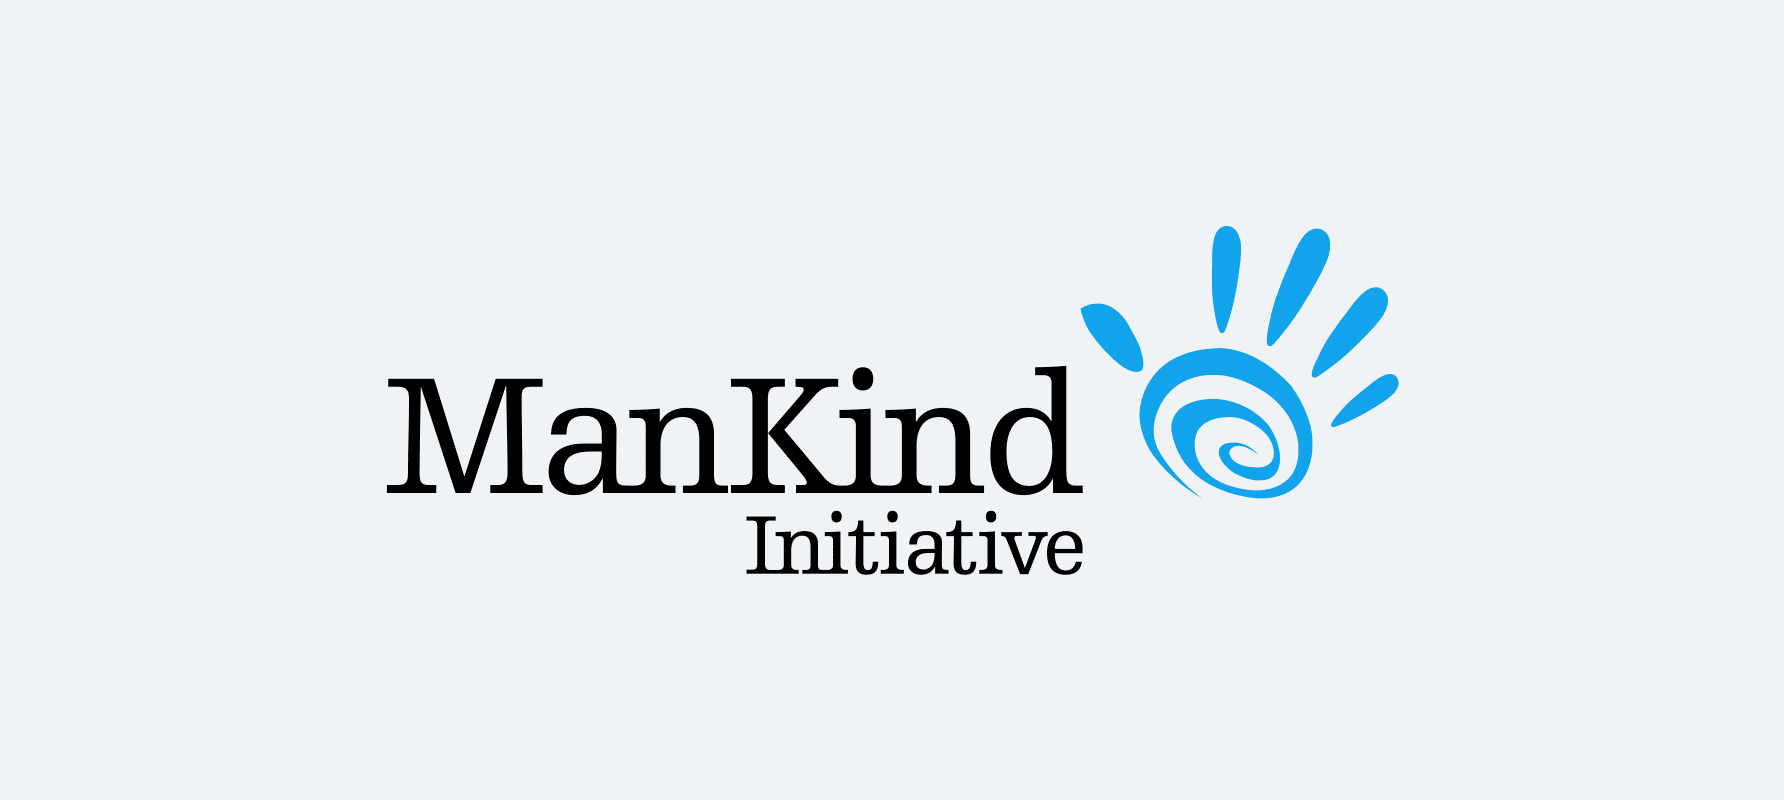 www.mankind.org.uk